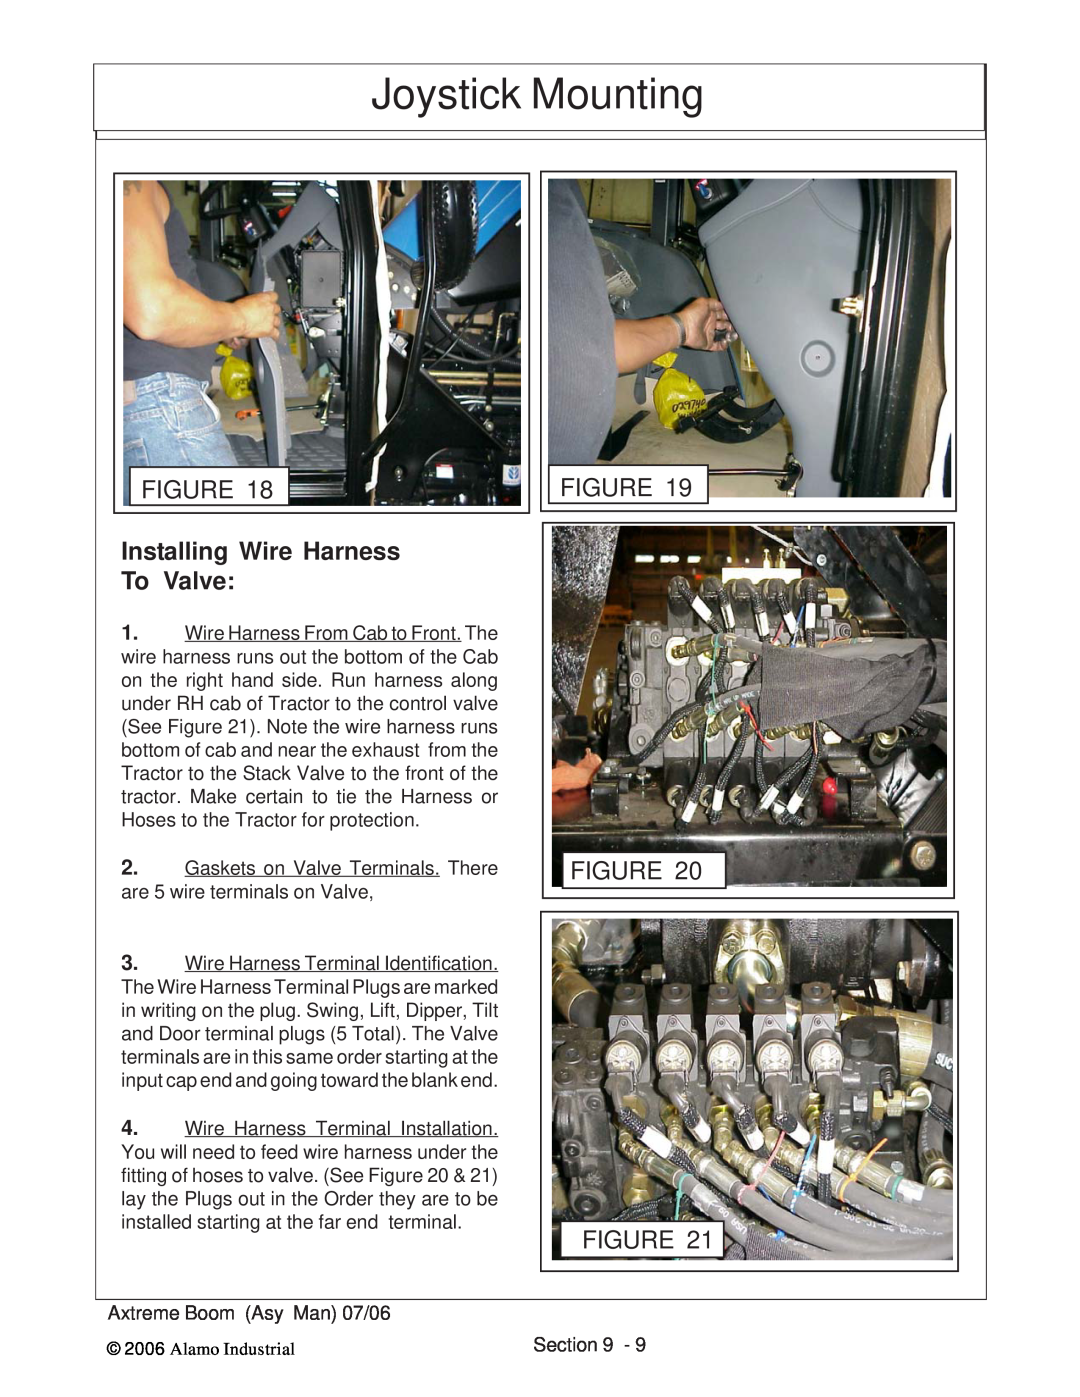 Alamo 02984405 instruction manual Installing Wire Harness To Valve, Joystick Mounting 